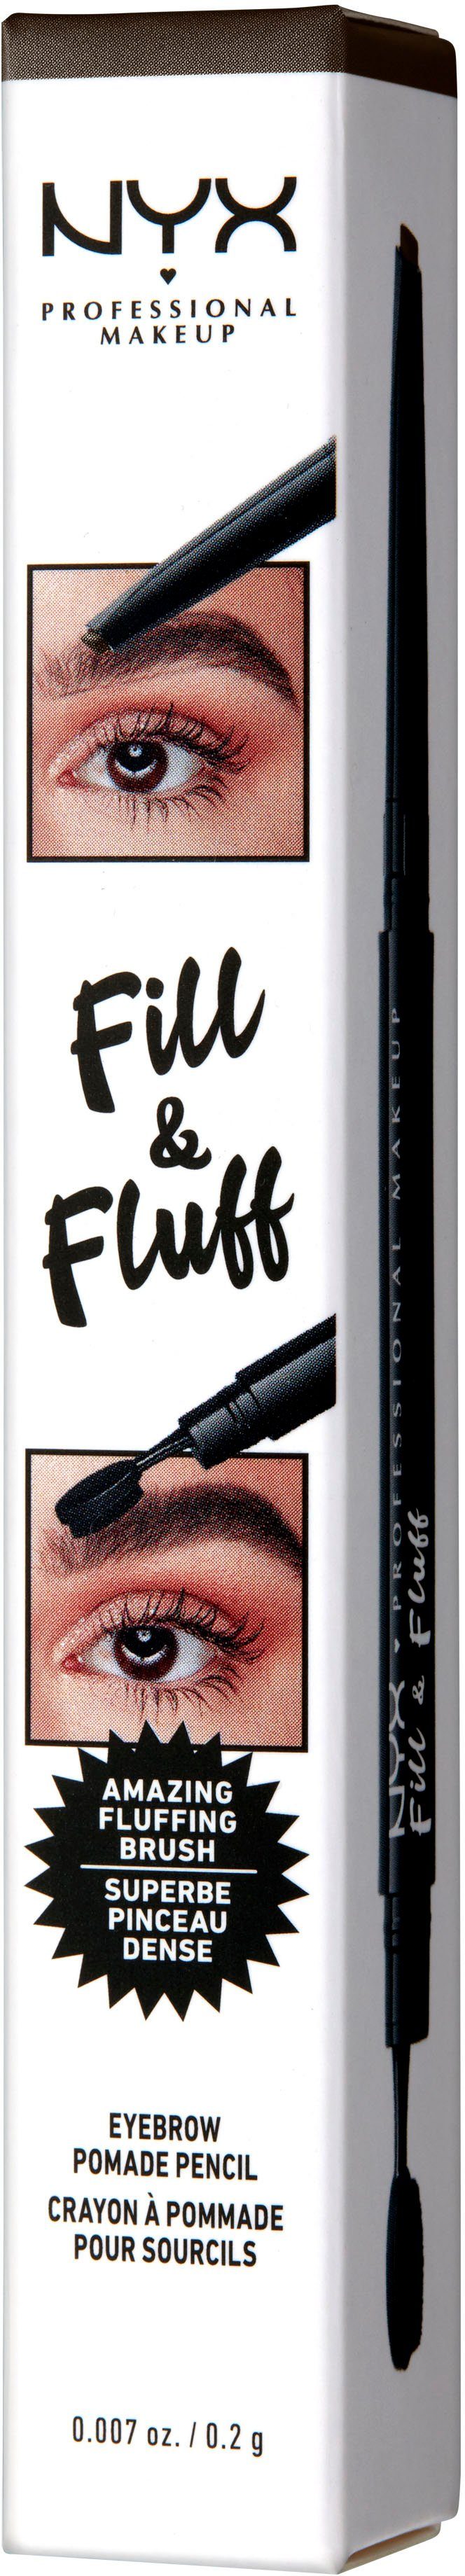 Fluff espresso Fill Pencil Makeup Pomade & Eyebrow Augenbrauen-Stift Professional NYX